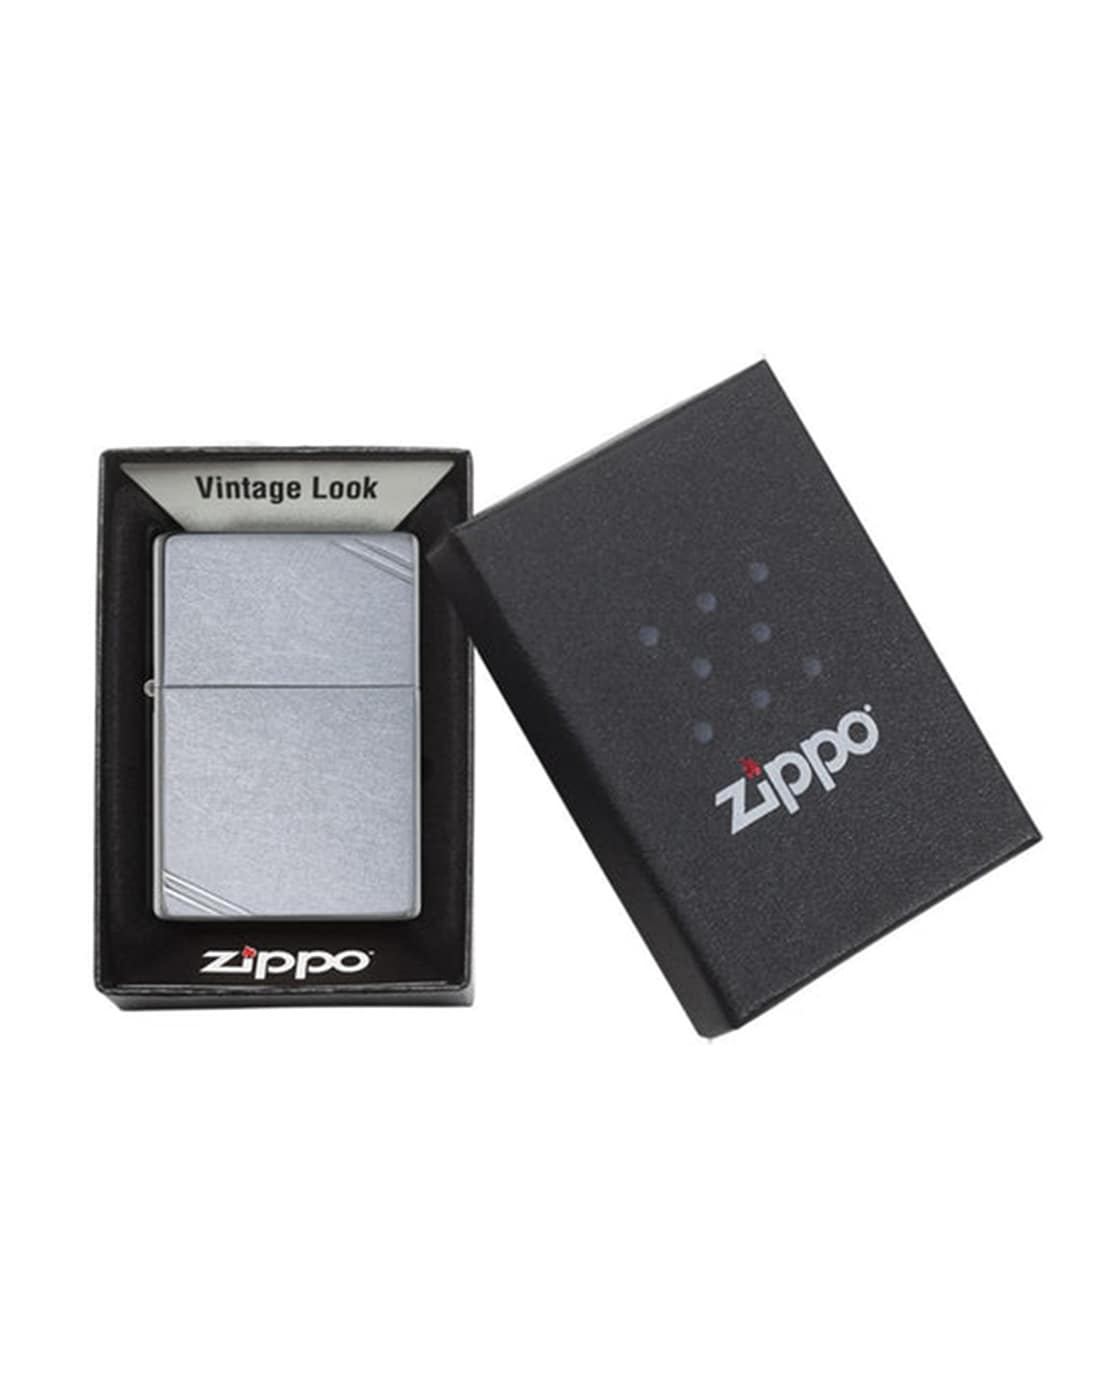 Zippo Classic Street Chrome Vintage Lighter, Buy Zippo Lighters